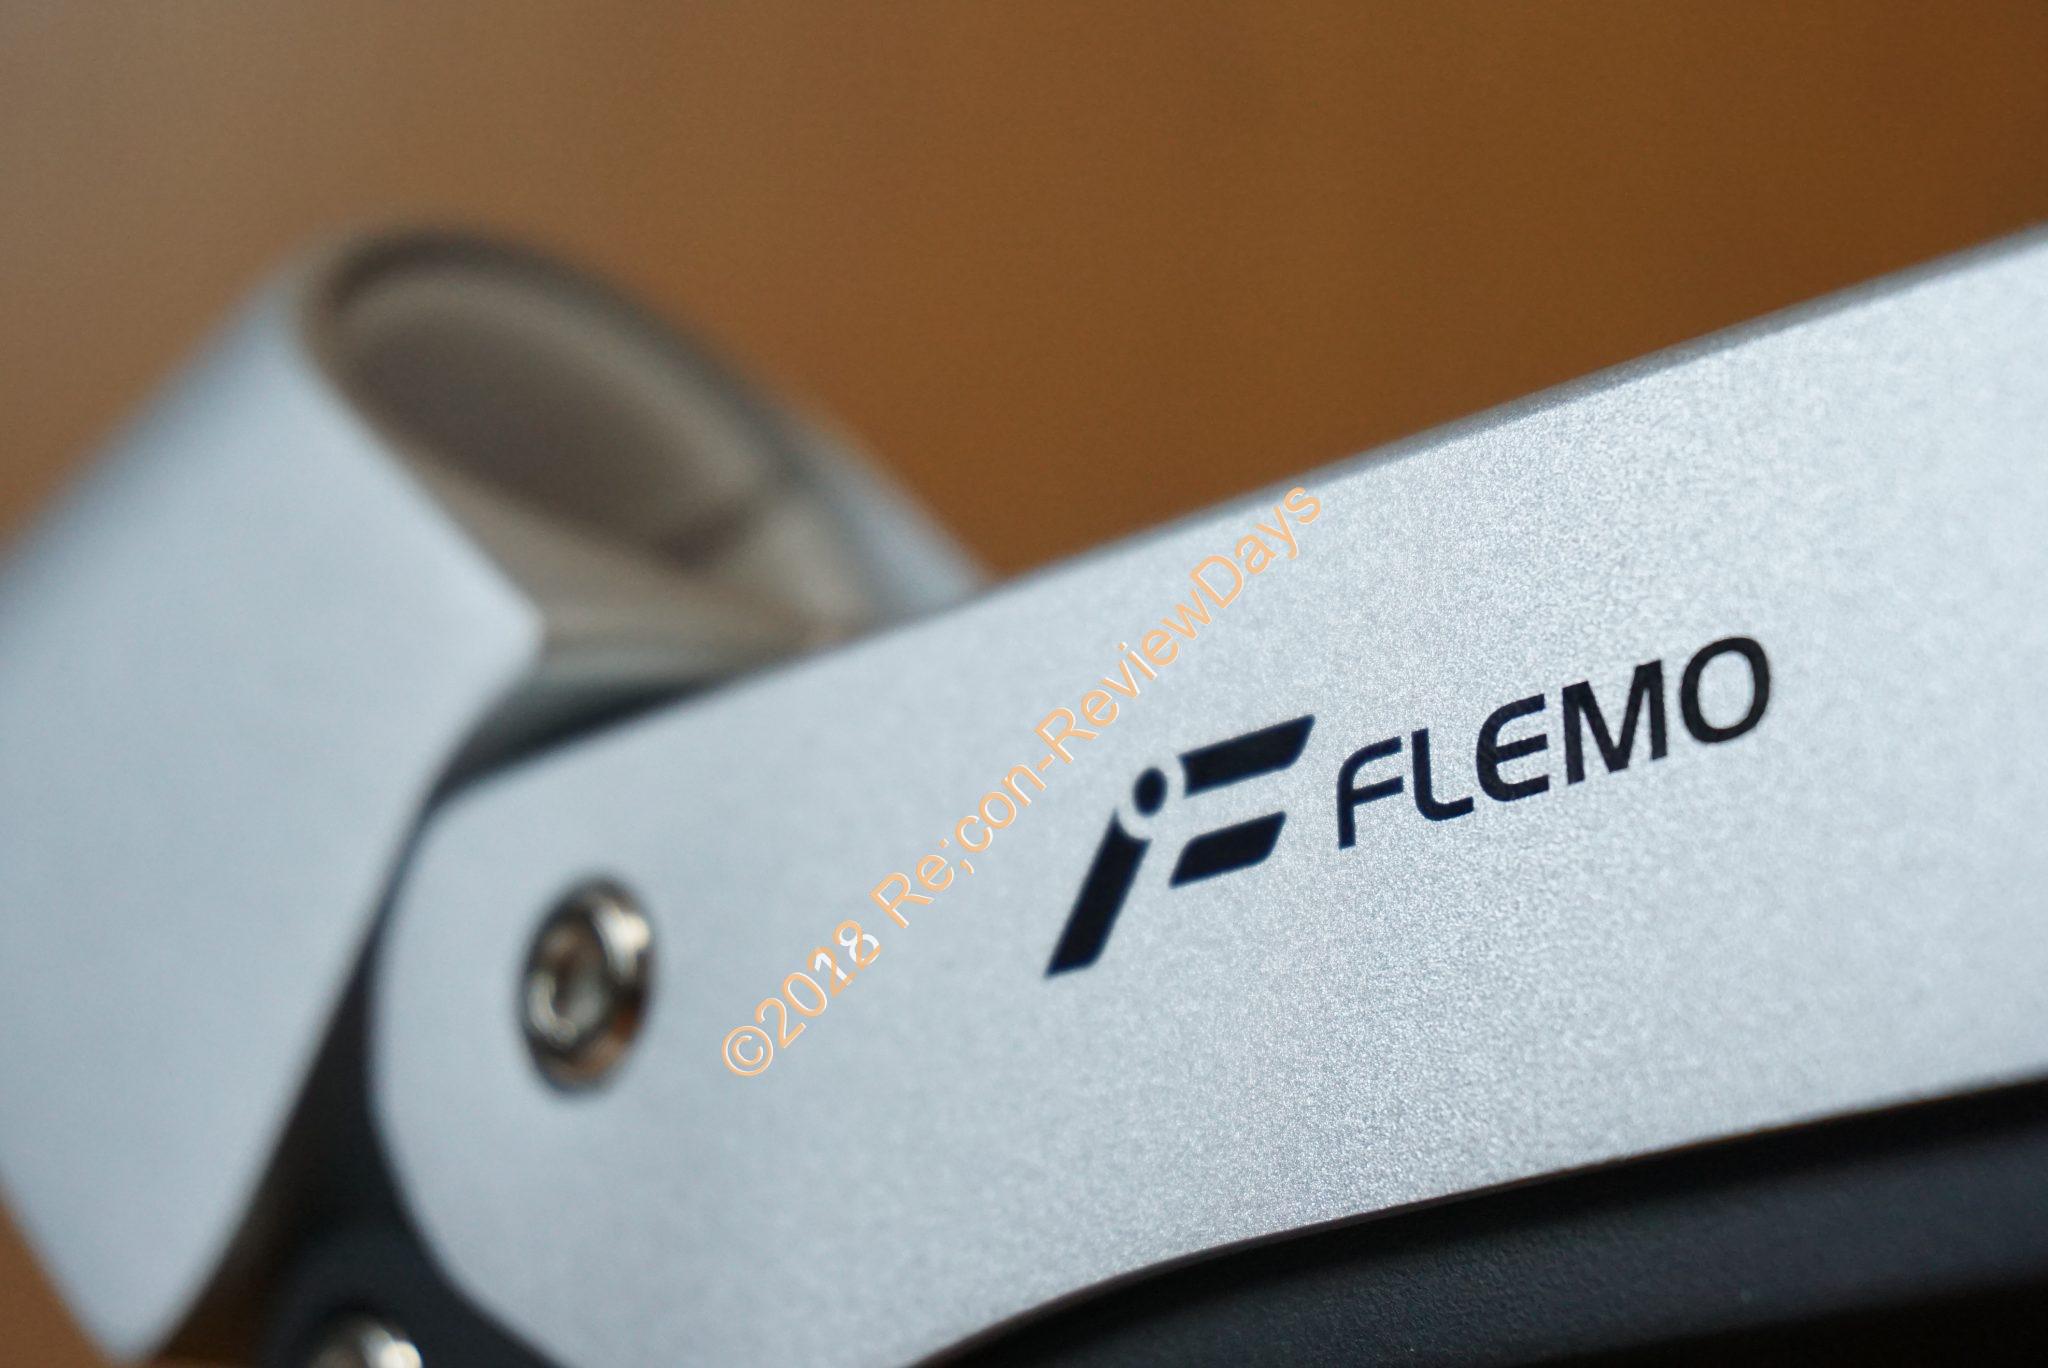 TEKWIND シングルモニターアーム「FLEMO FLM-DSA01」をチェックする #TEKWIND #テックウィンド #モニターアーム